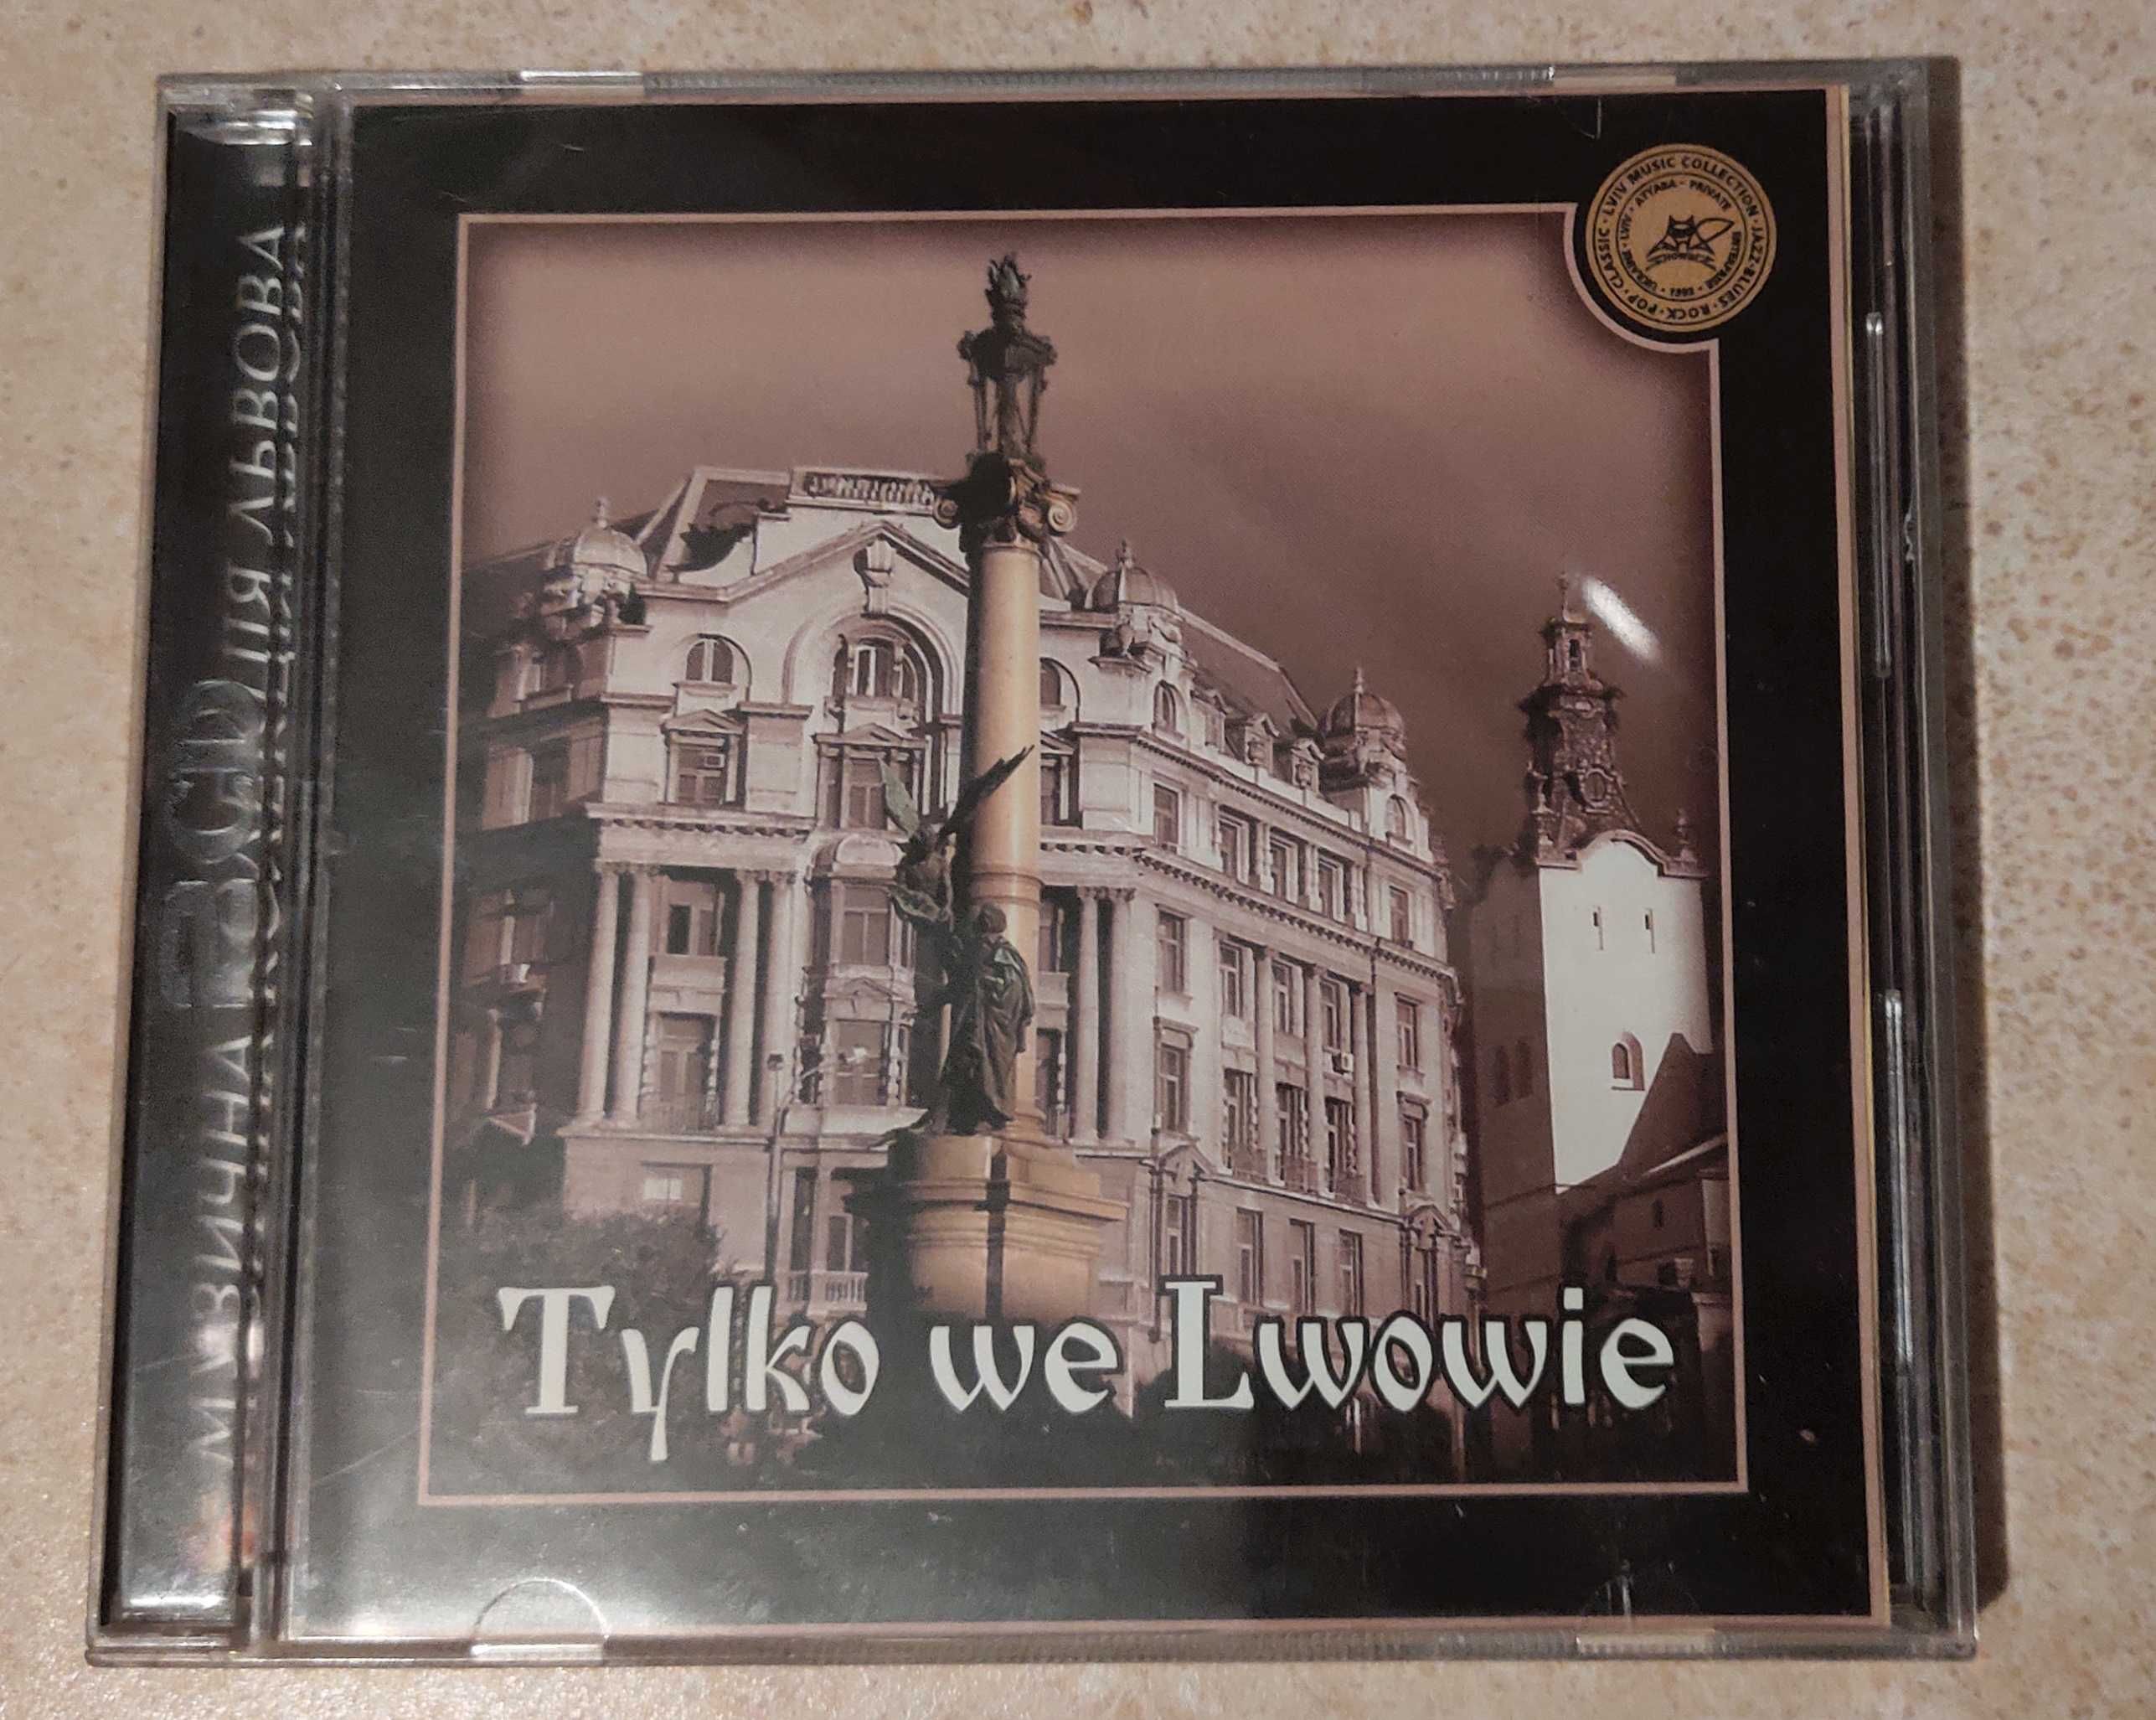 2 CD "Tylko we Lwowie" Музична колекція Львова (тираж 500шт)